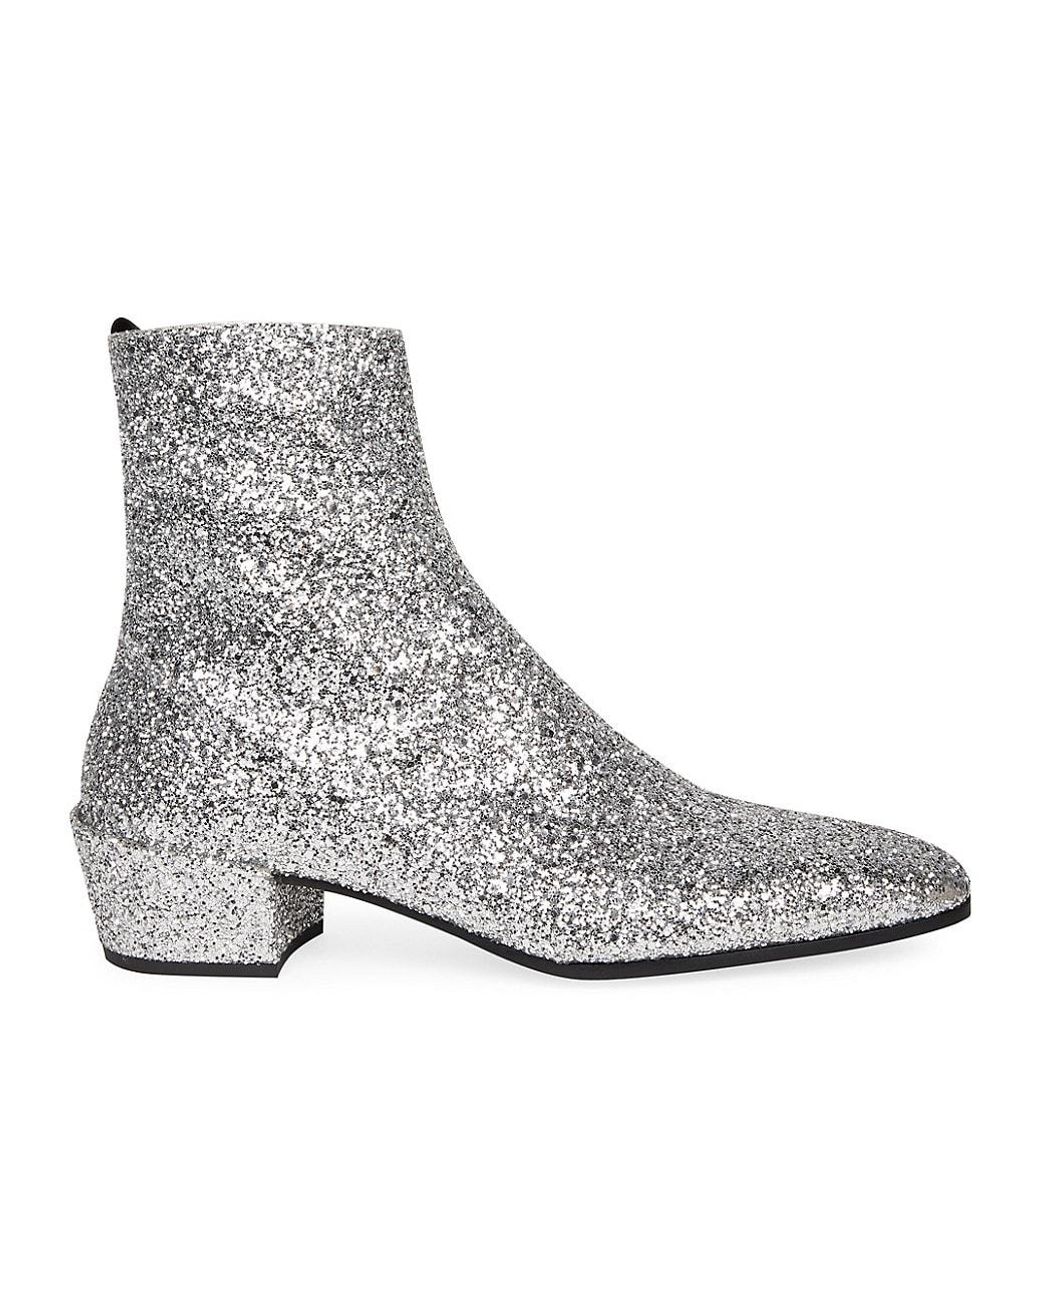 Saint Laurent Caleb Glitter Ankle Boots in Metallic for Men | Lyst